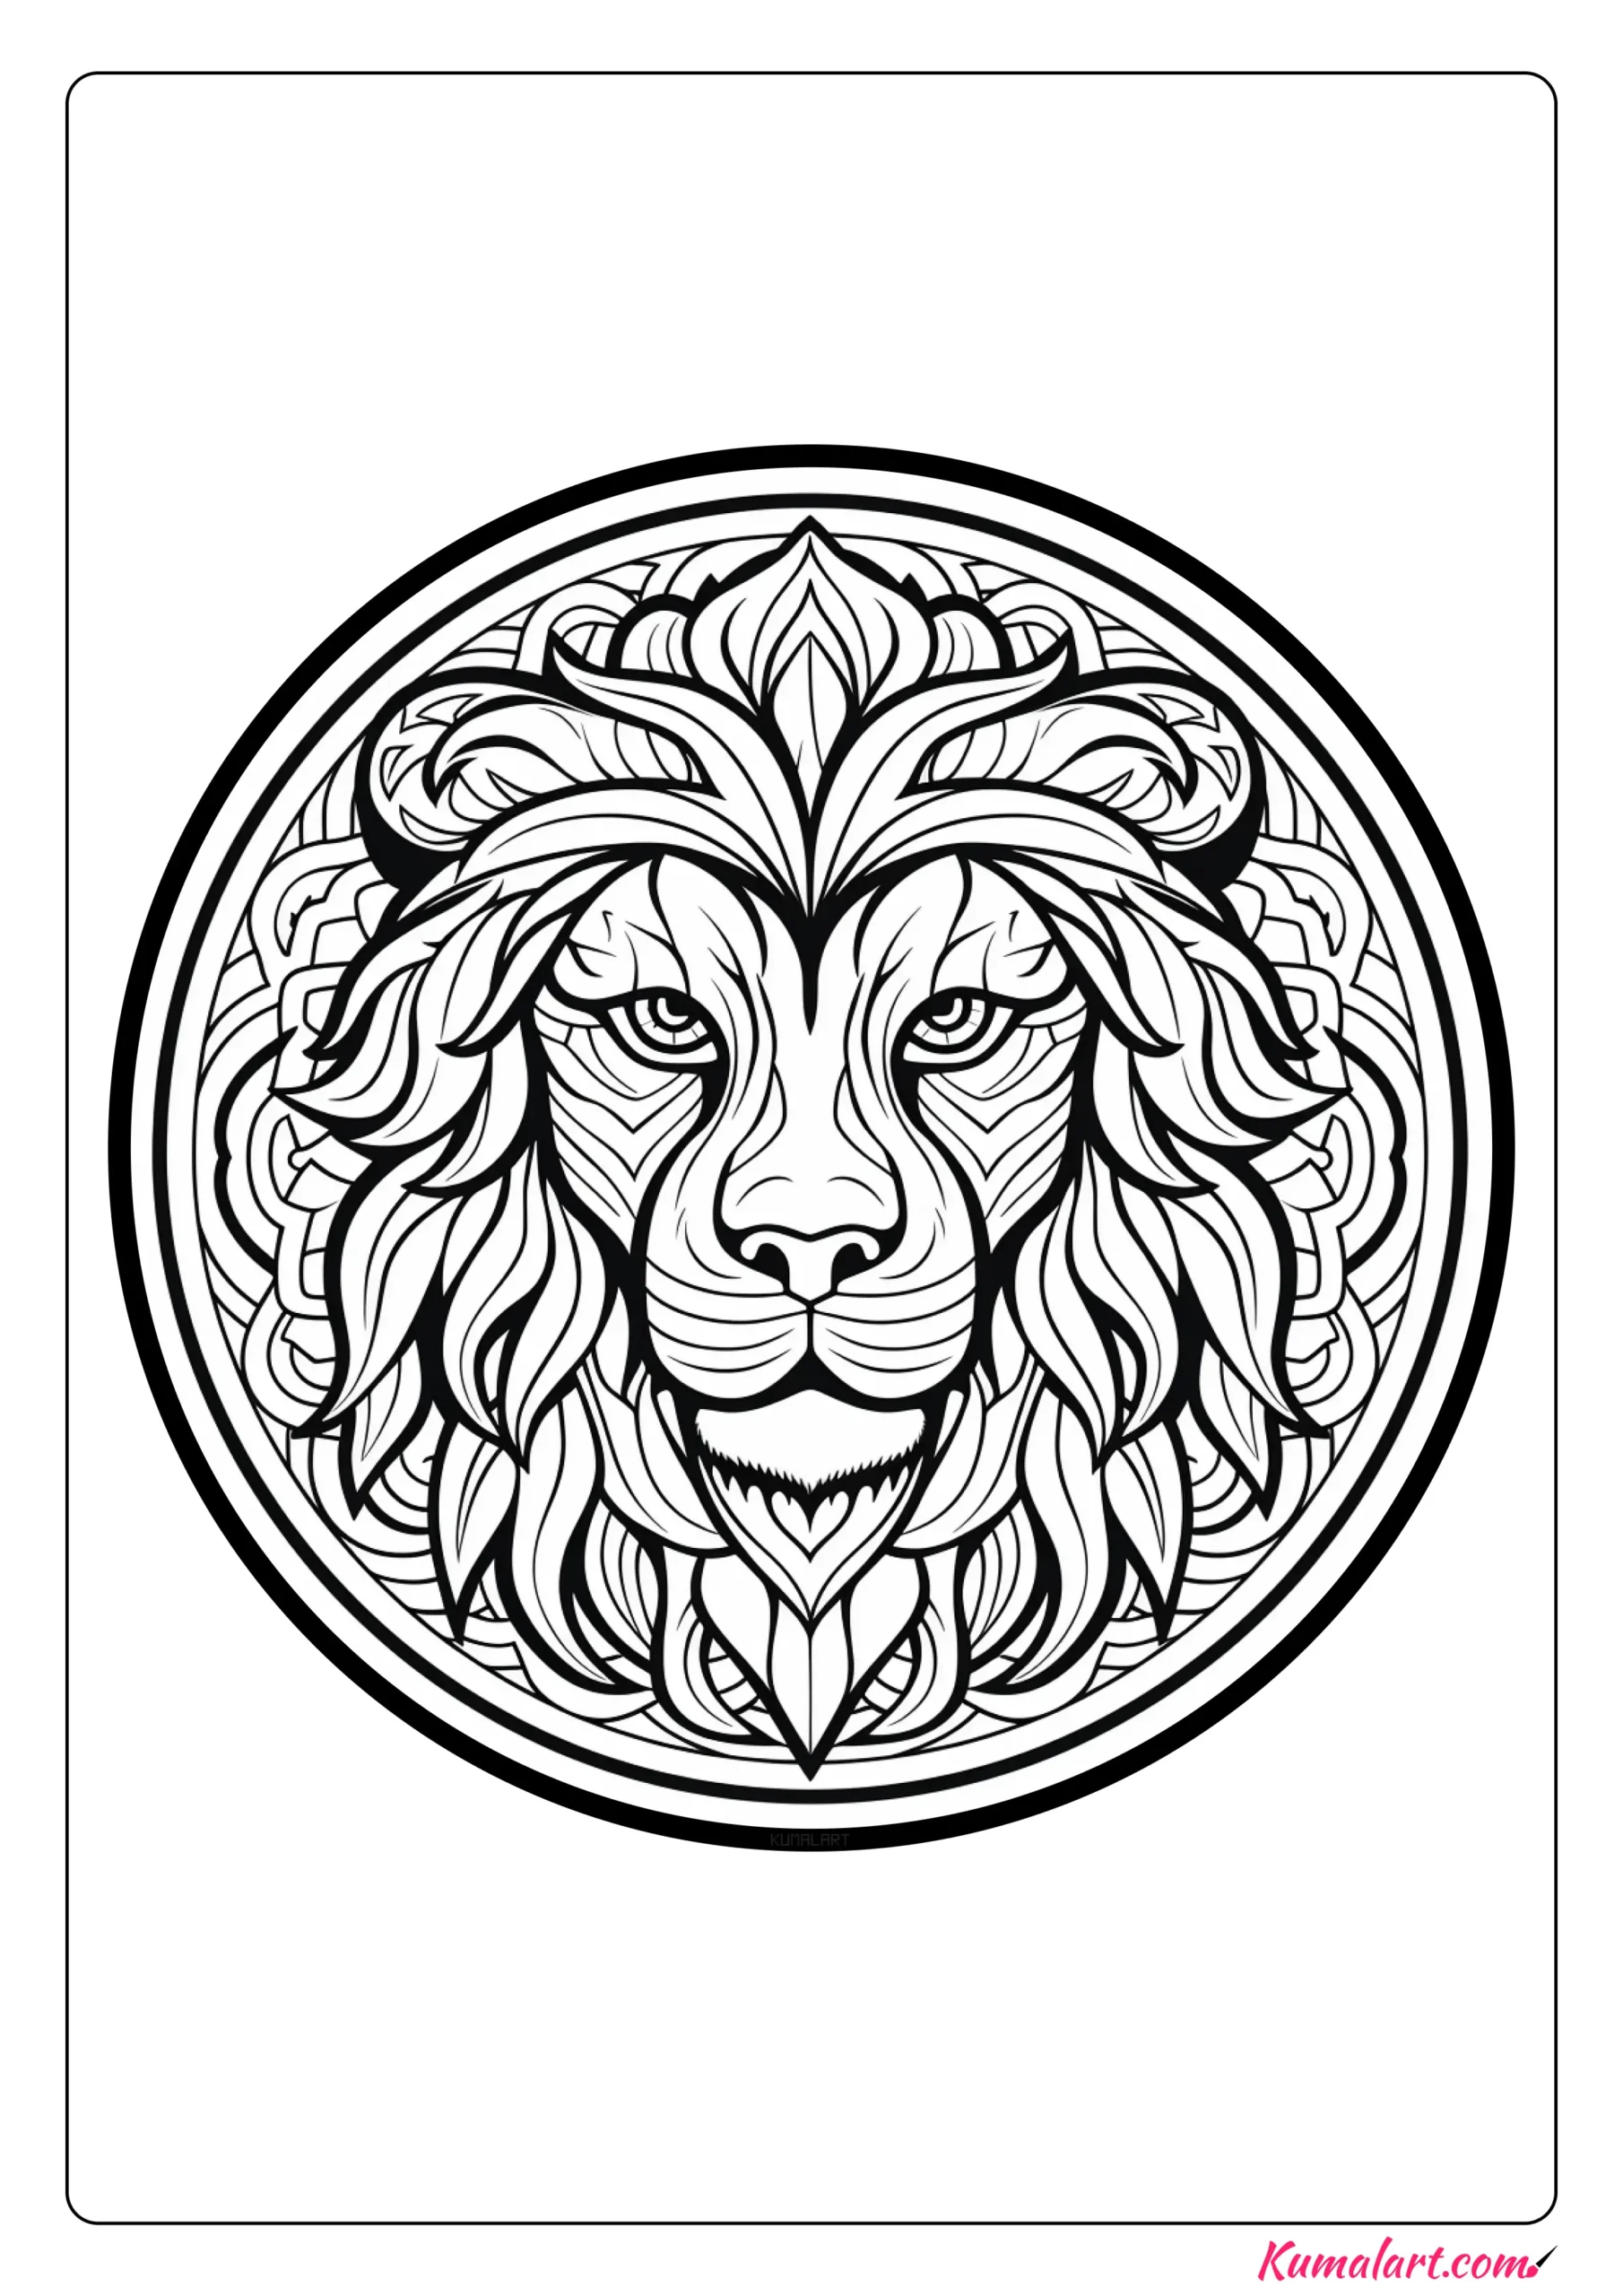 Alan the Lion Mandala Coloring Page